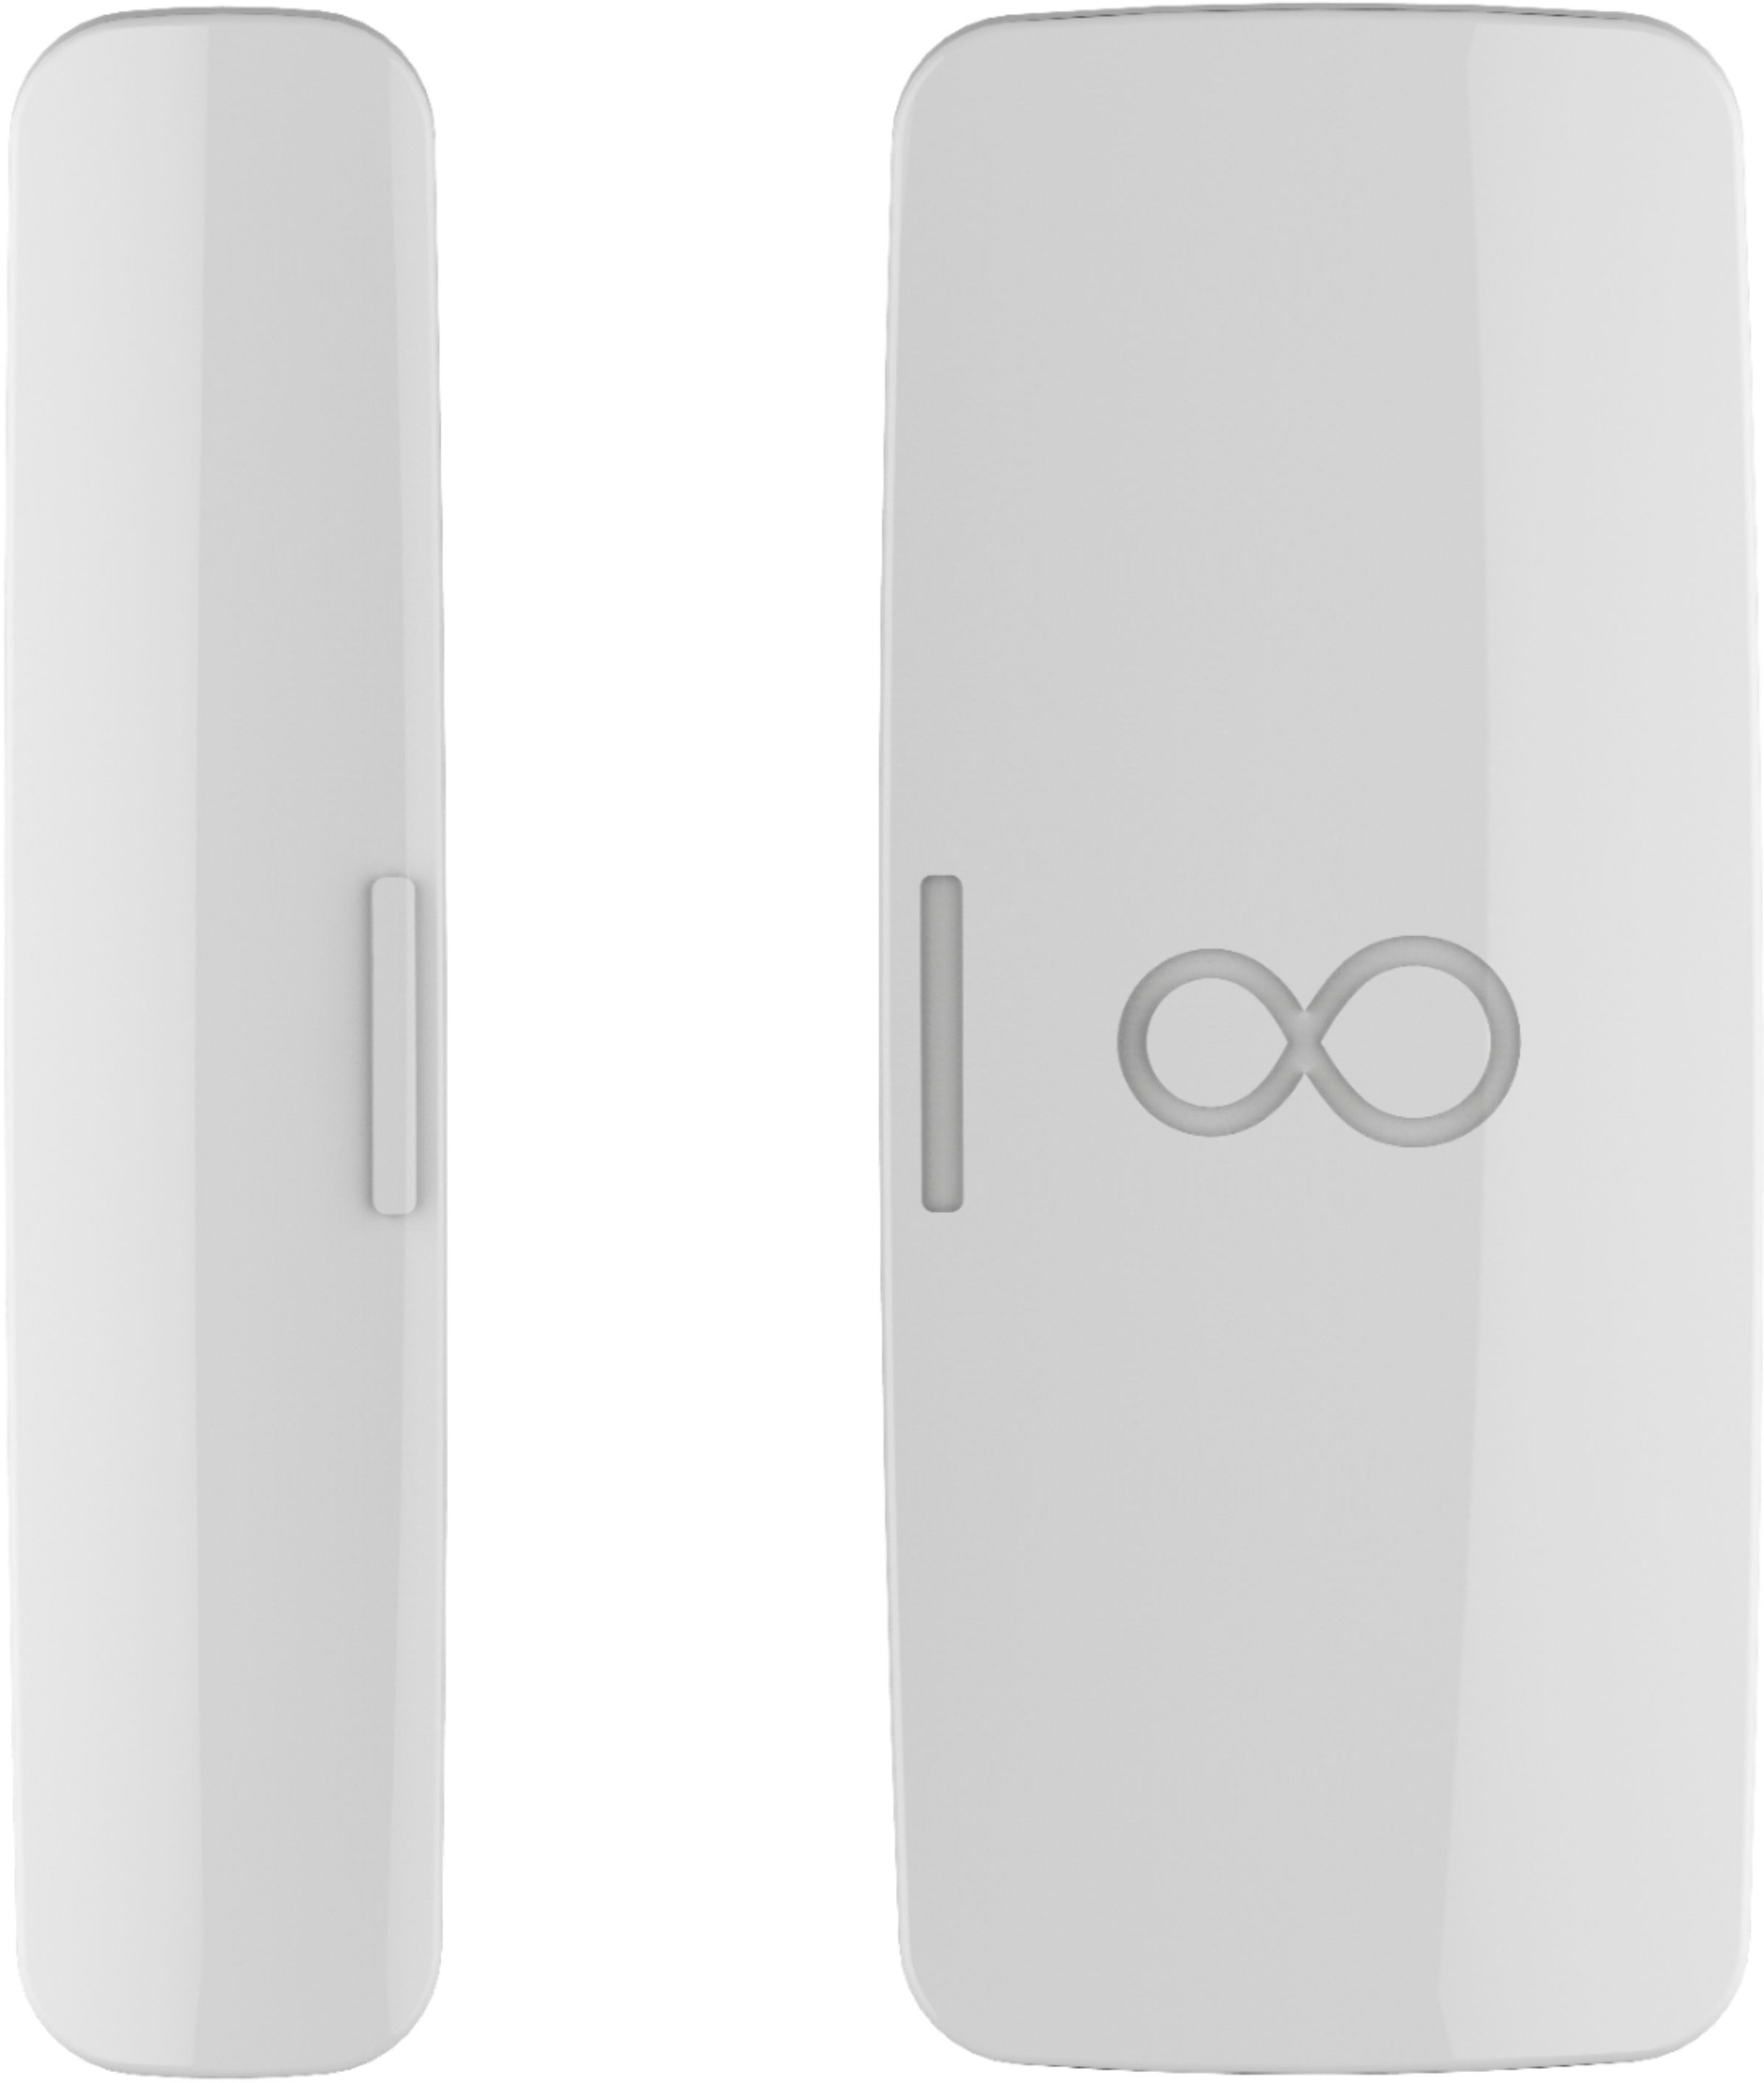 Sengled - Smart Window & Door Sensor (2-Pack) - White